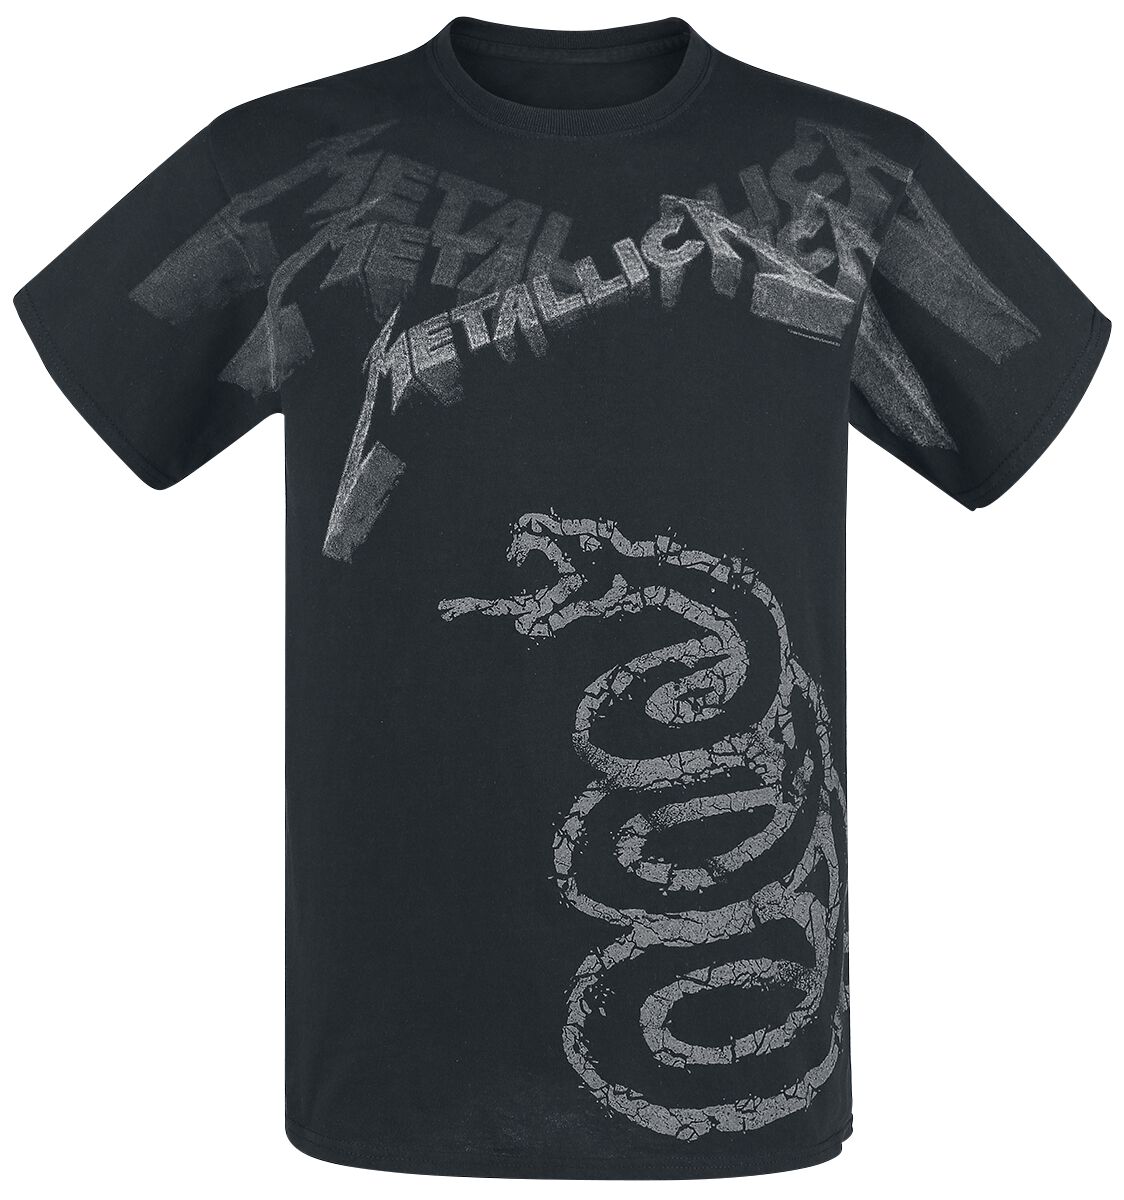 Metallica Black Album Faded T-Shirt black